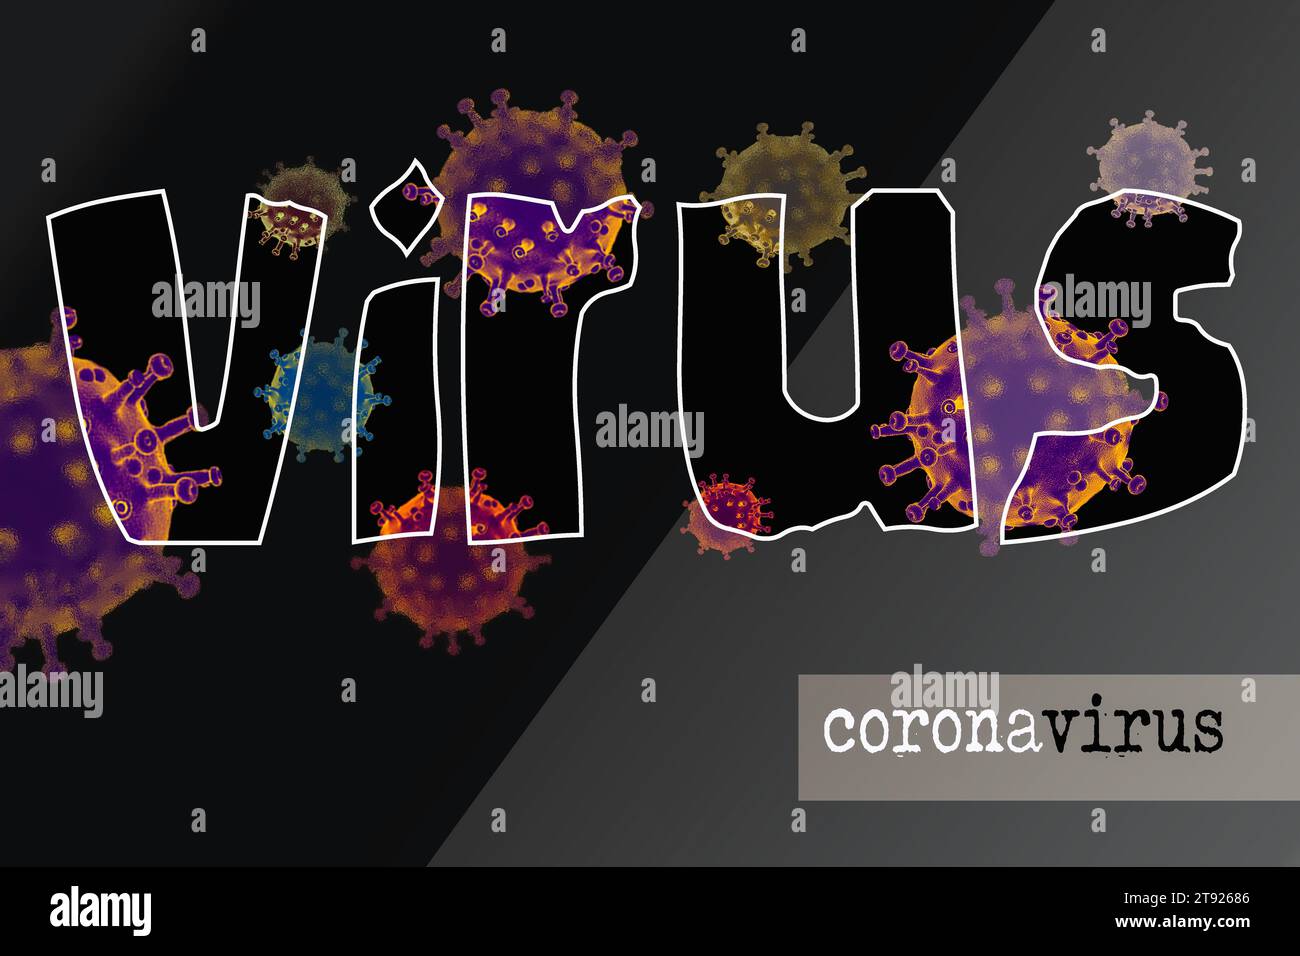 Coronavirus disease (COVID-19) outbreak and coronaviruses influenza background Stock Photo